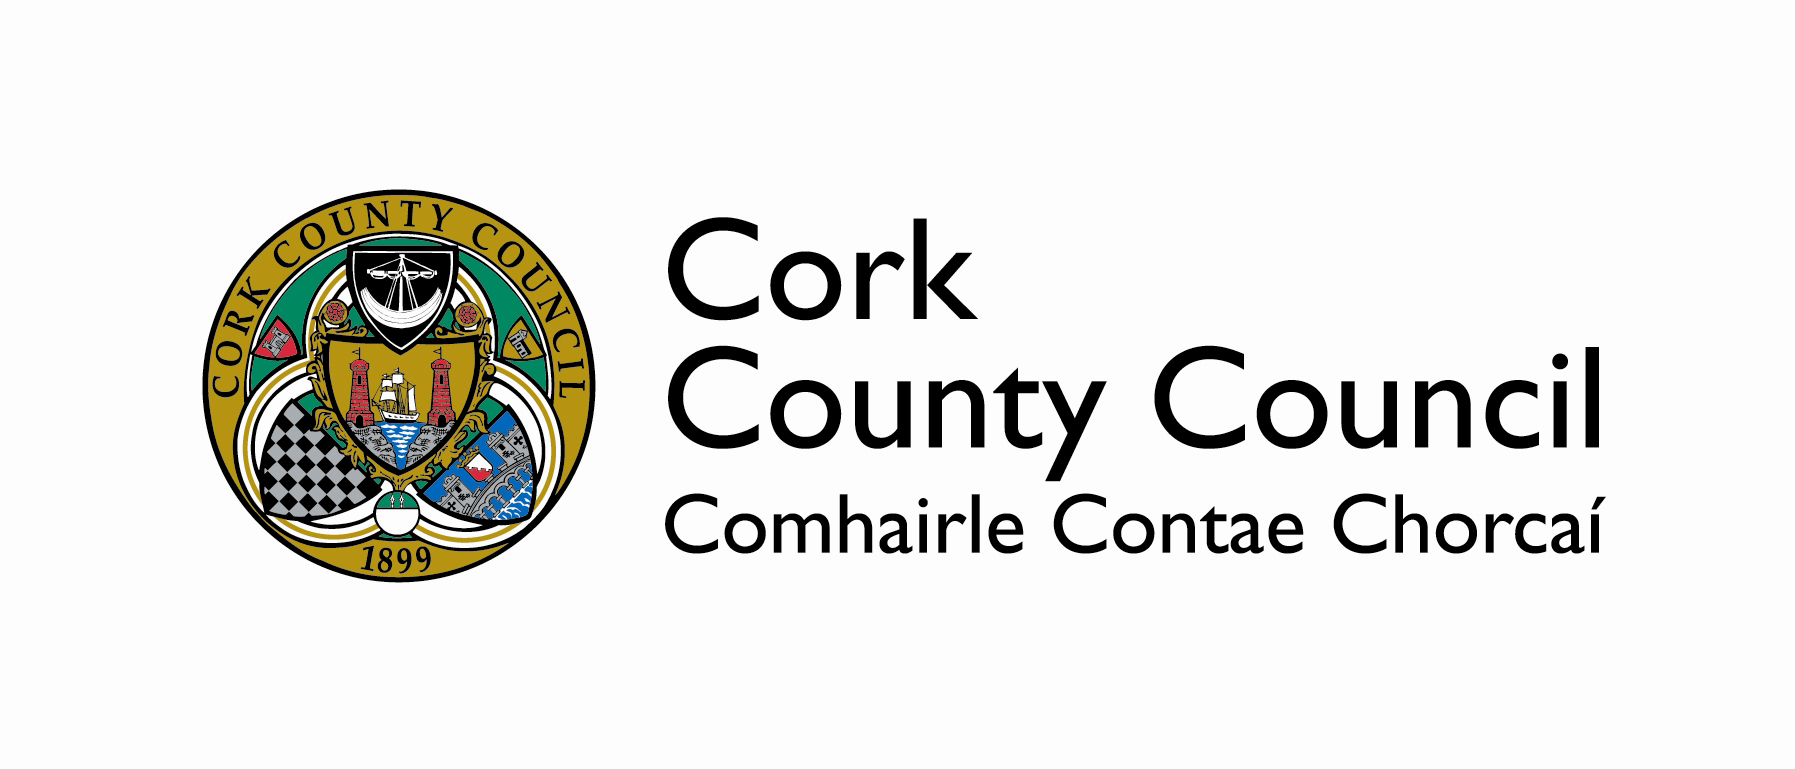 Cork County Council Logo 2015.png